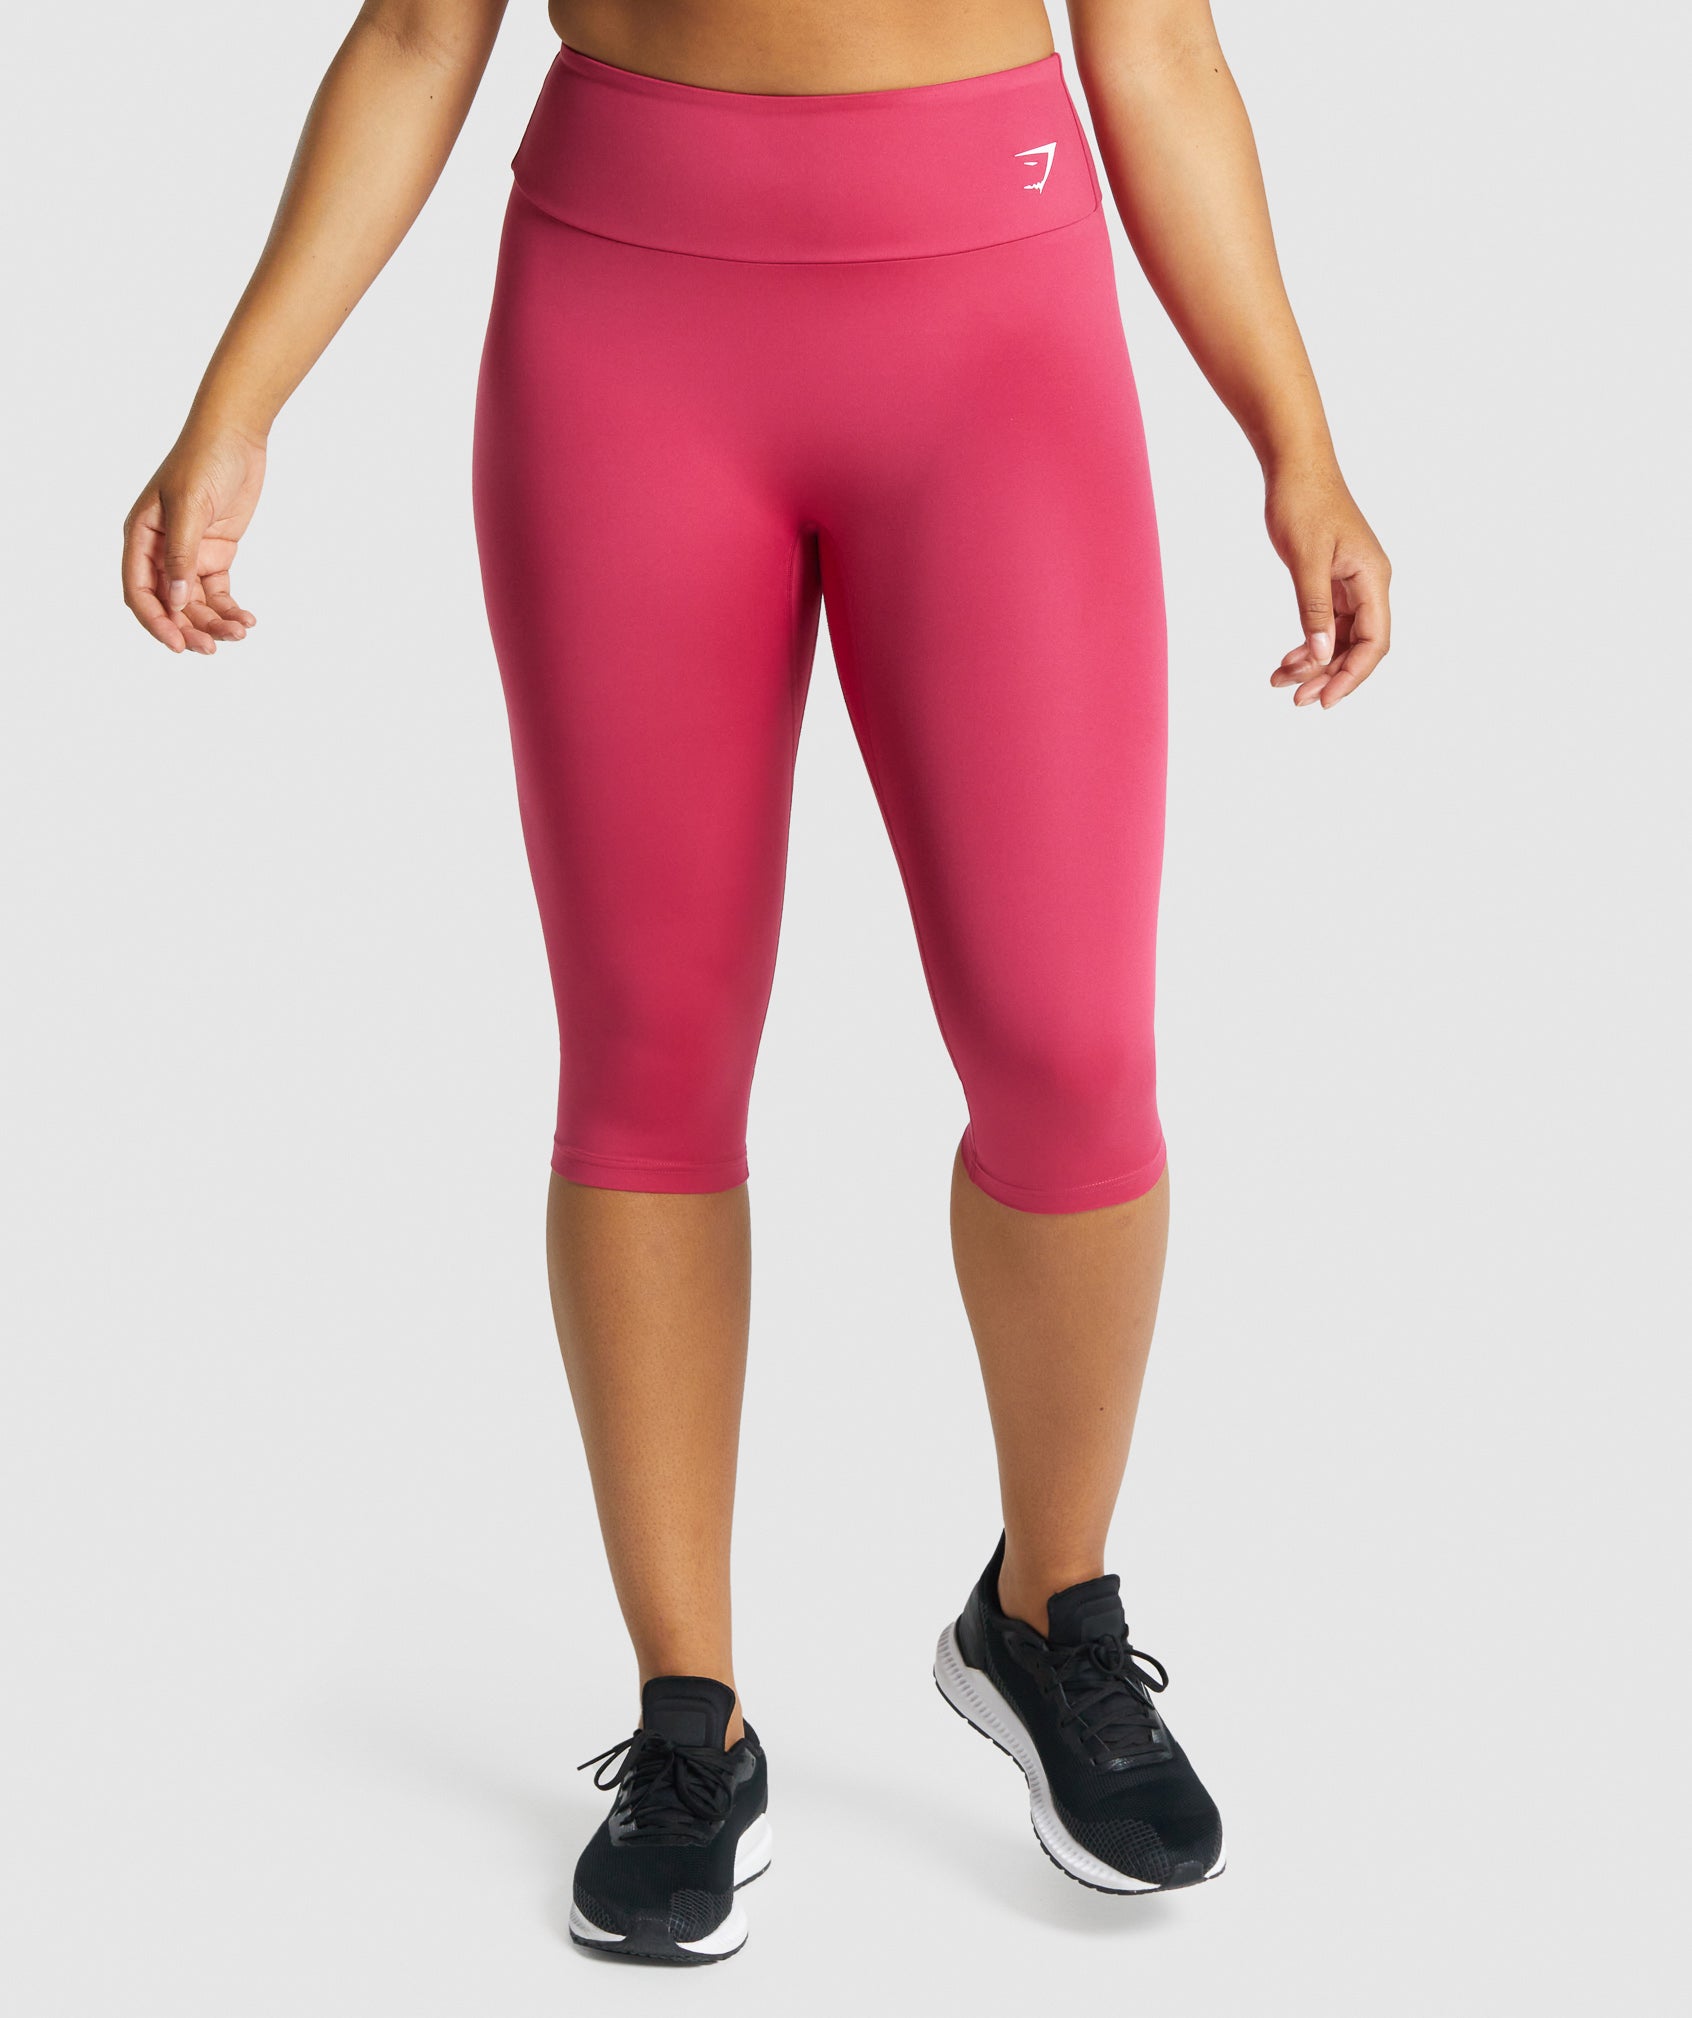 Leggins Deportivo Mujer Negro/rosa - Gym Crossfit Fit